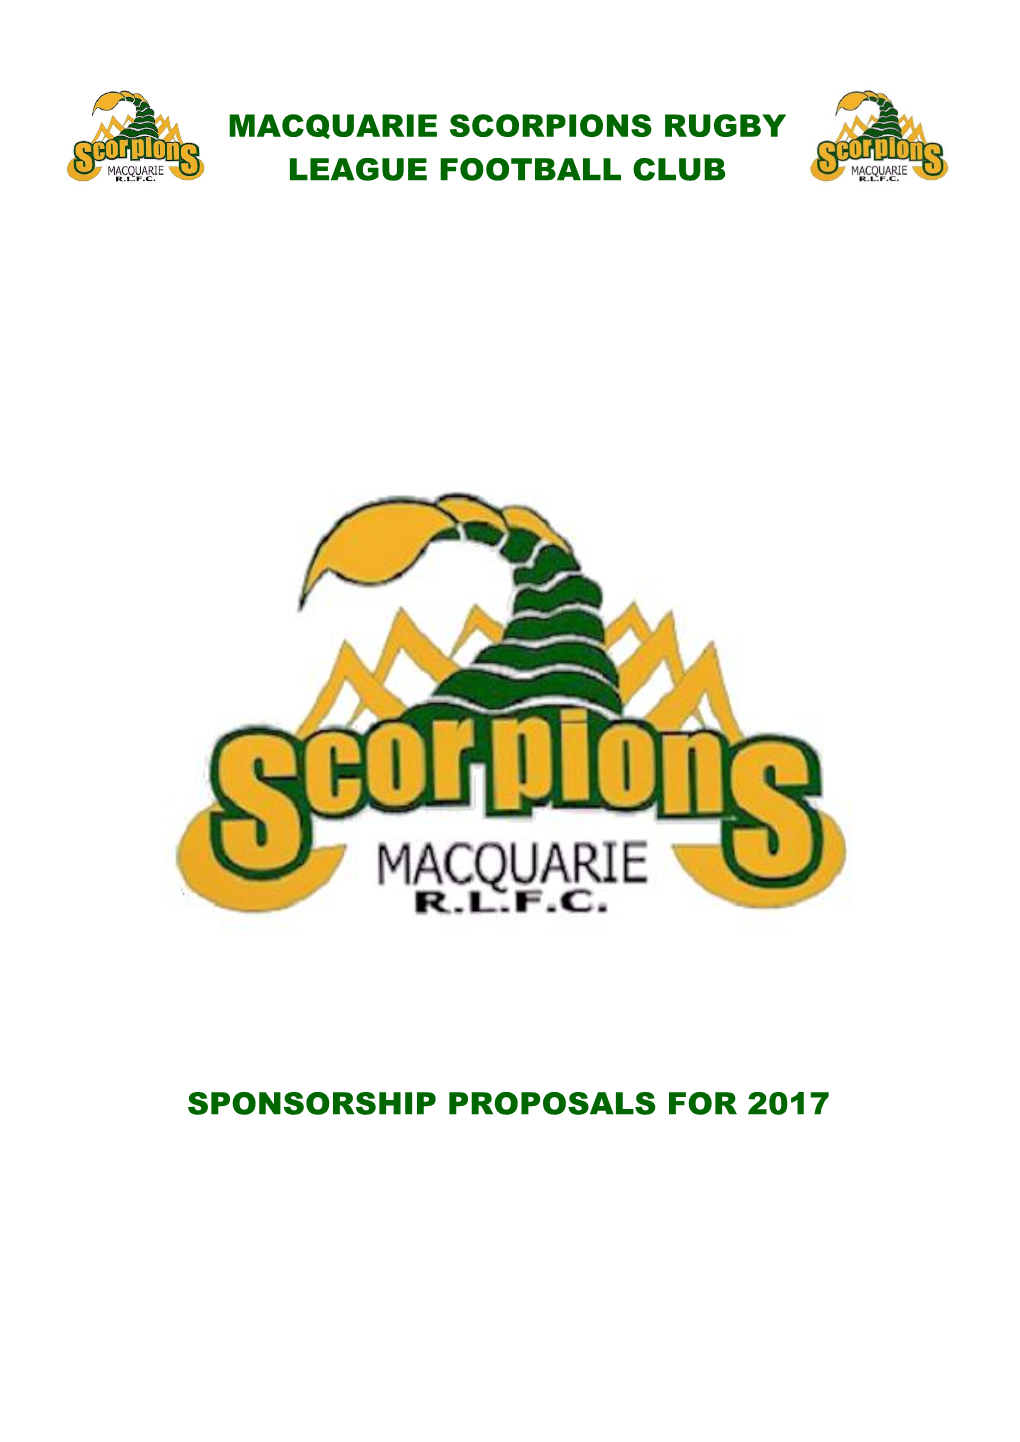 Macquarie Scorpions Rugby League Football Club